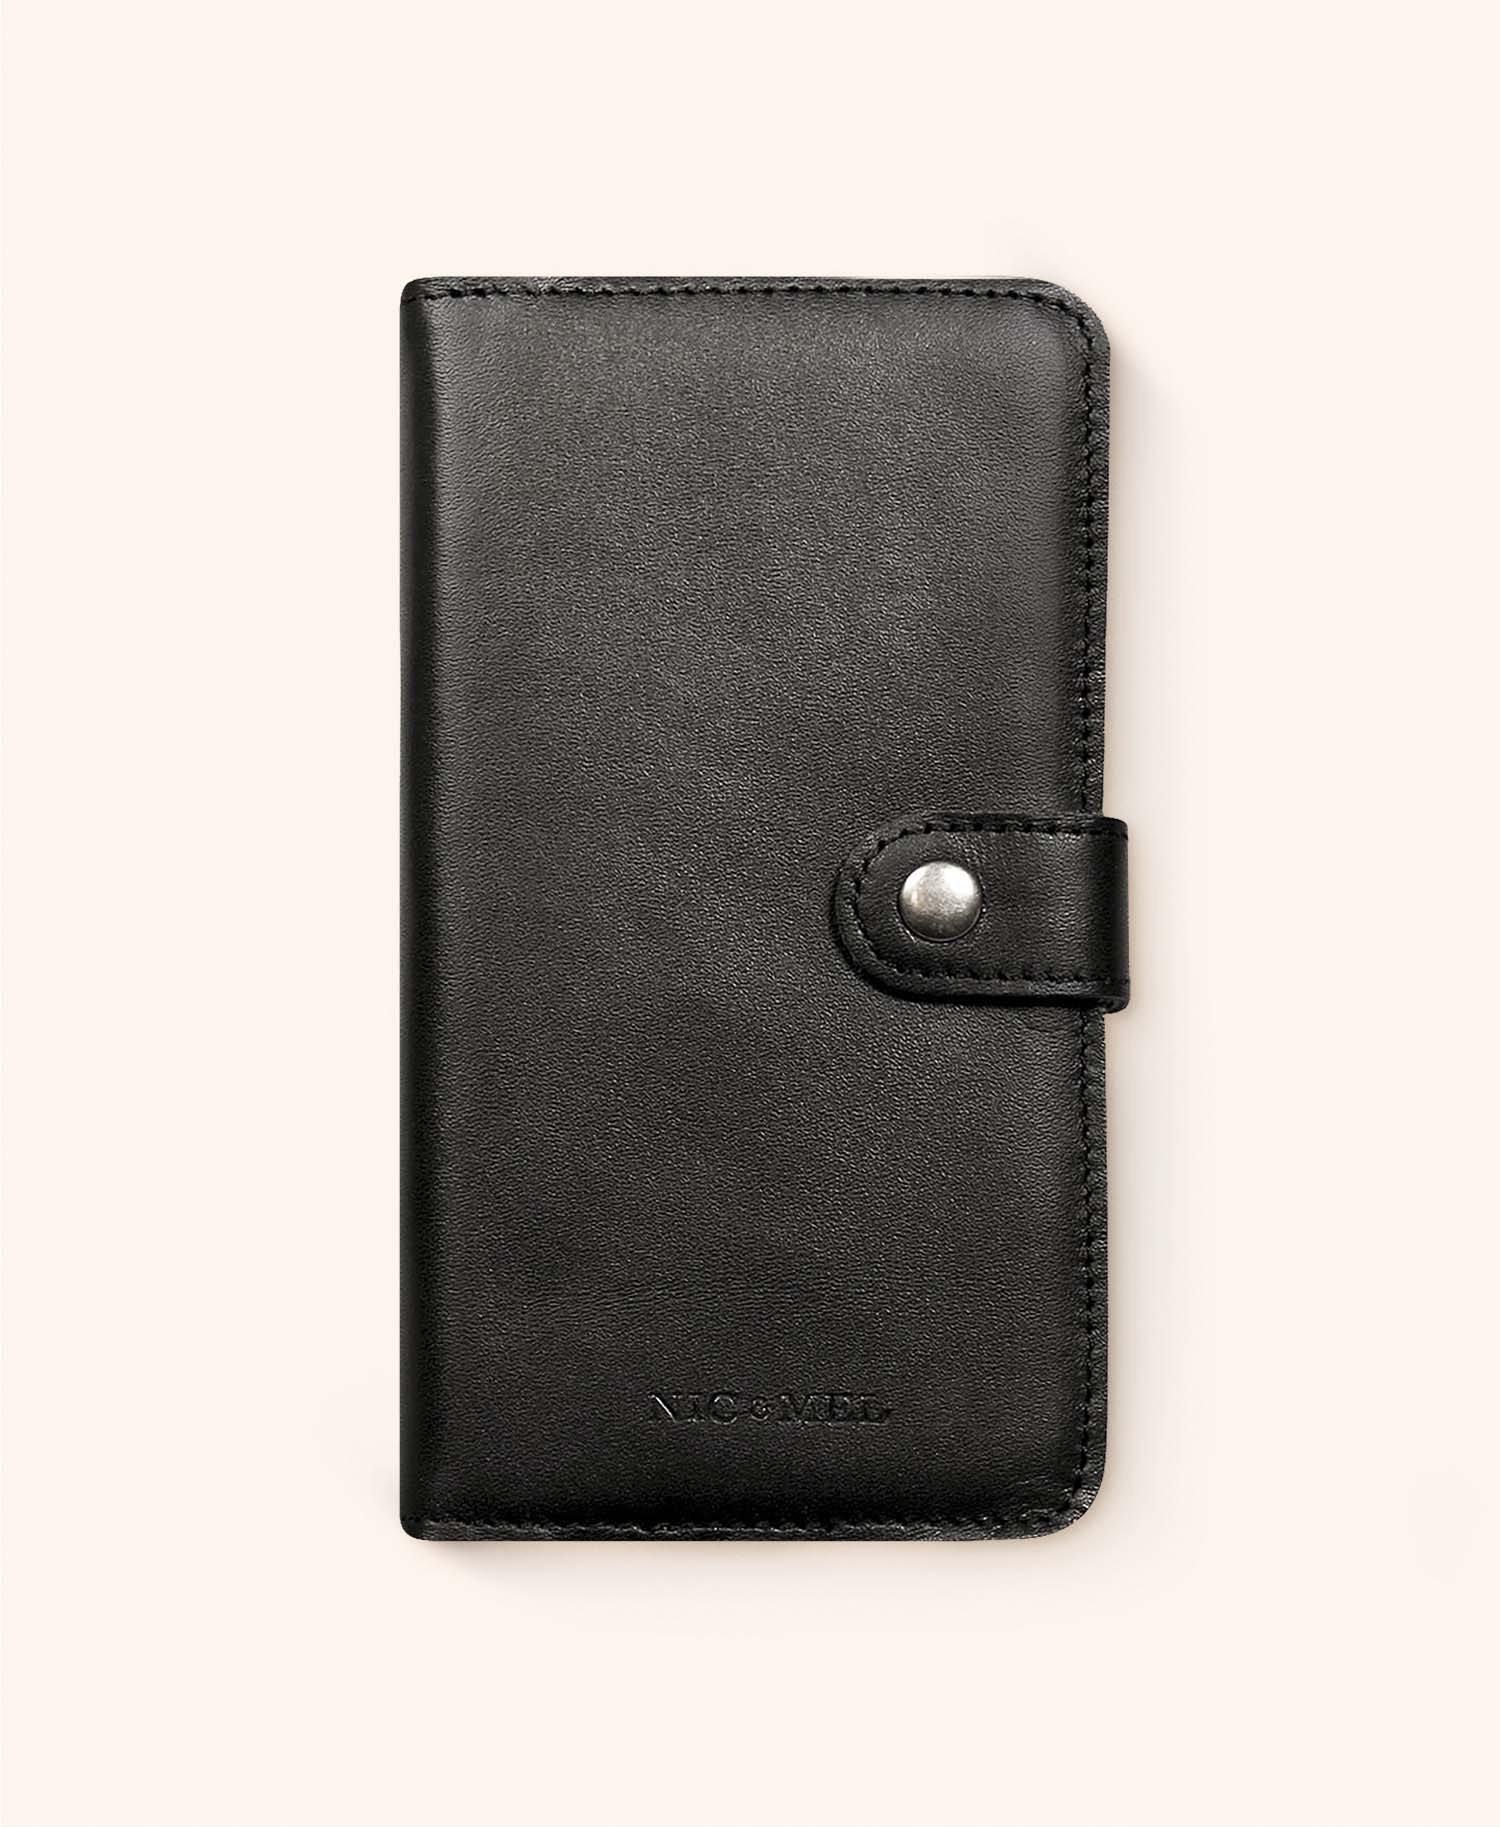 Andrew black wallet iphone 11 Pro Max